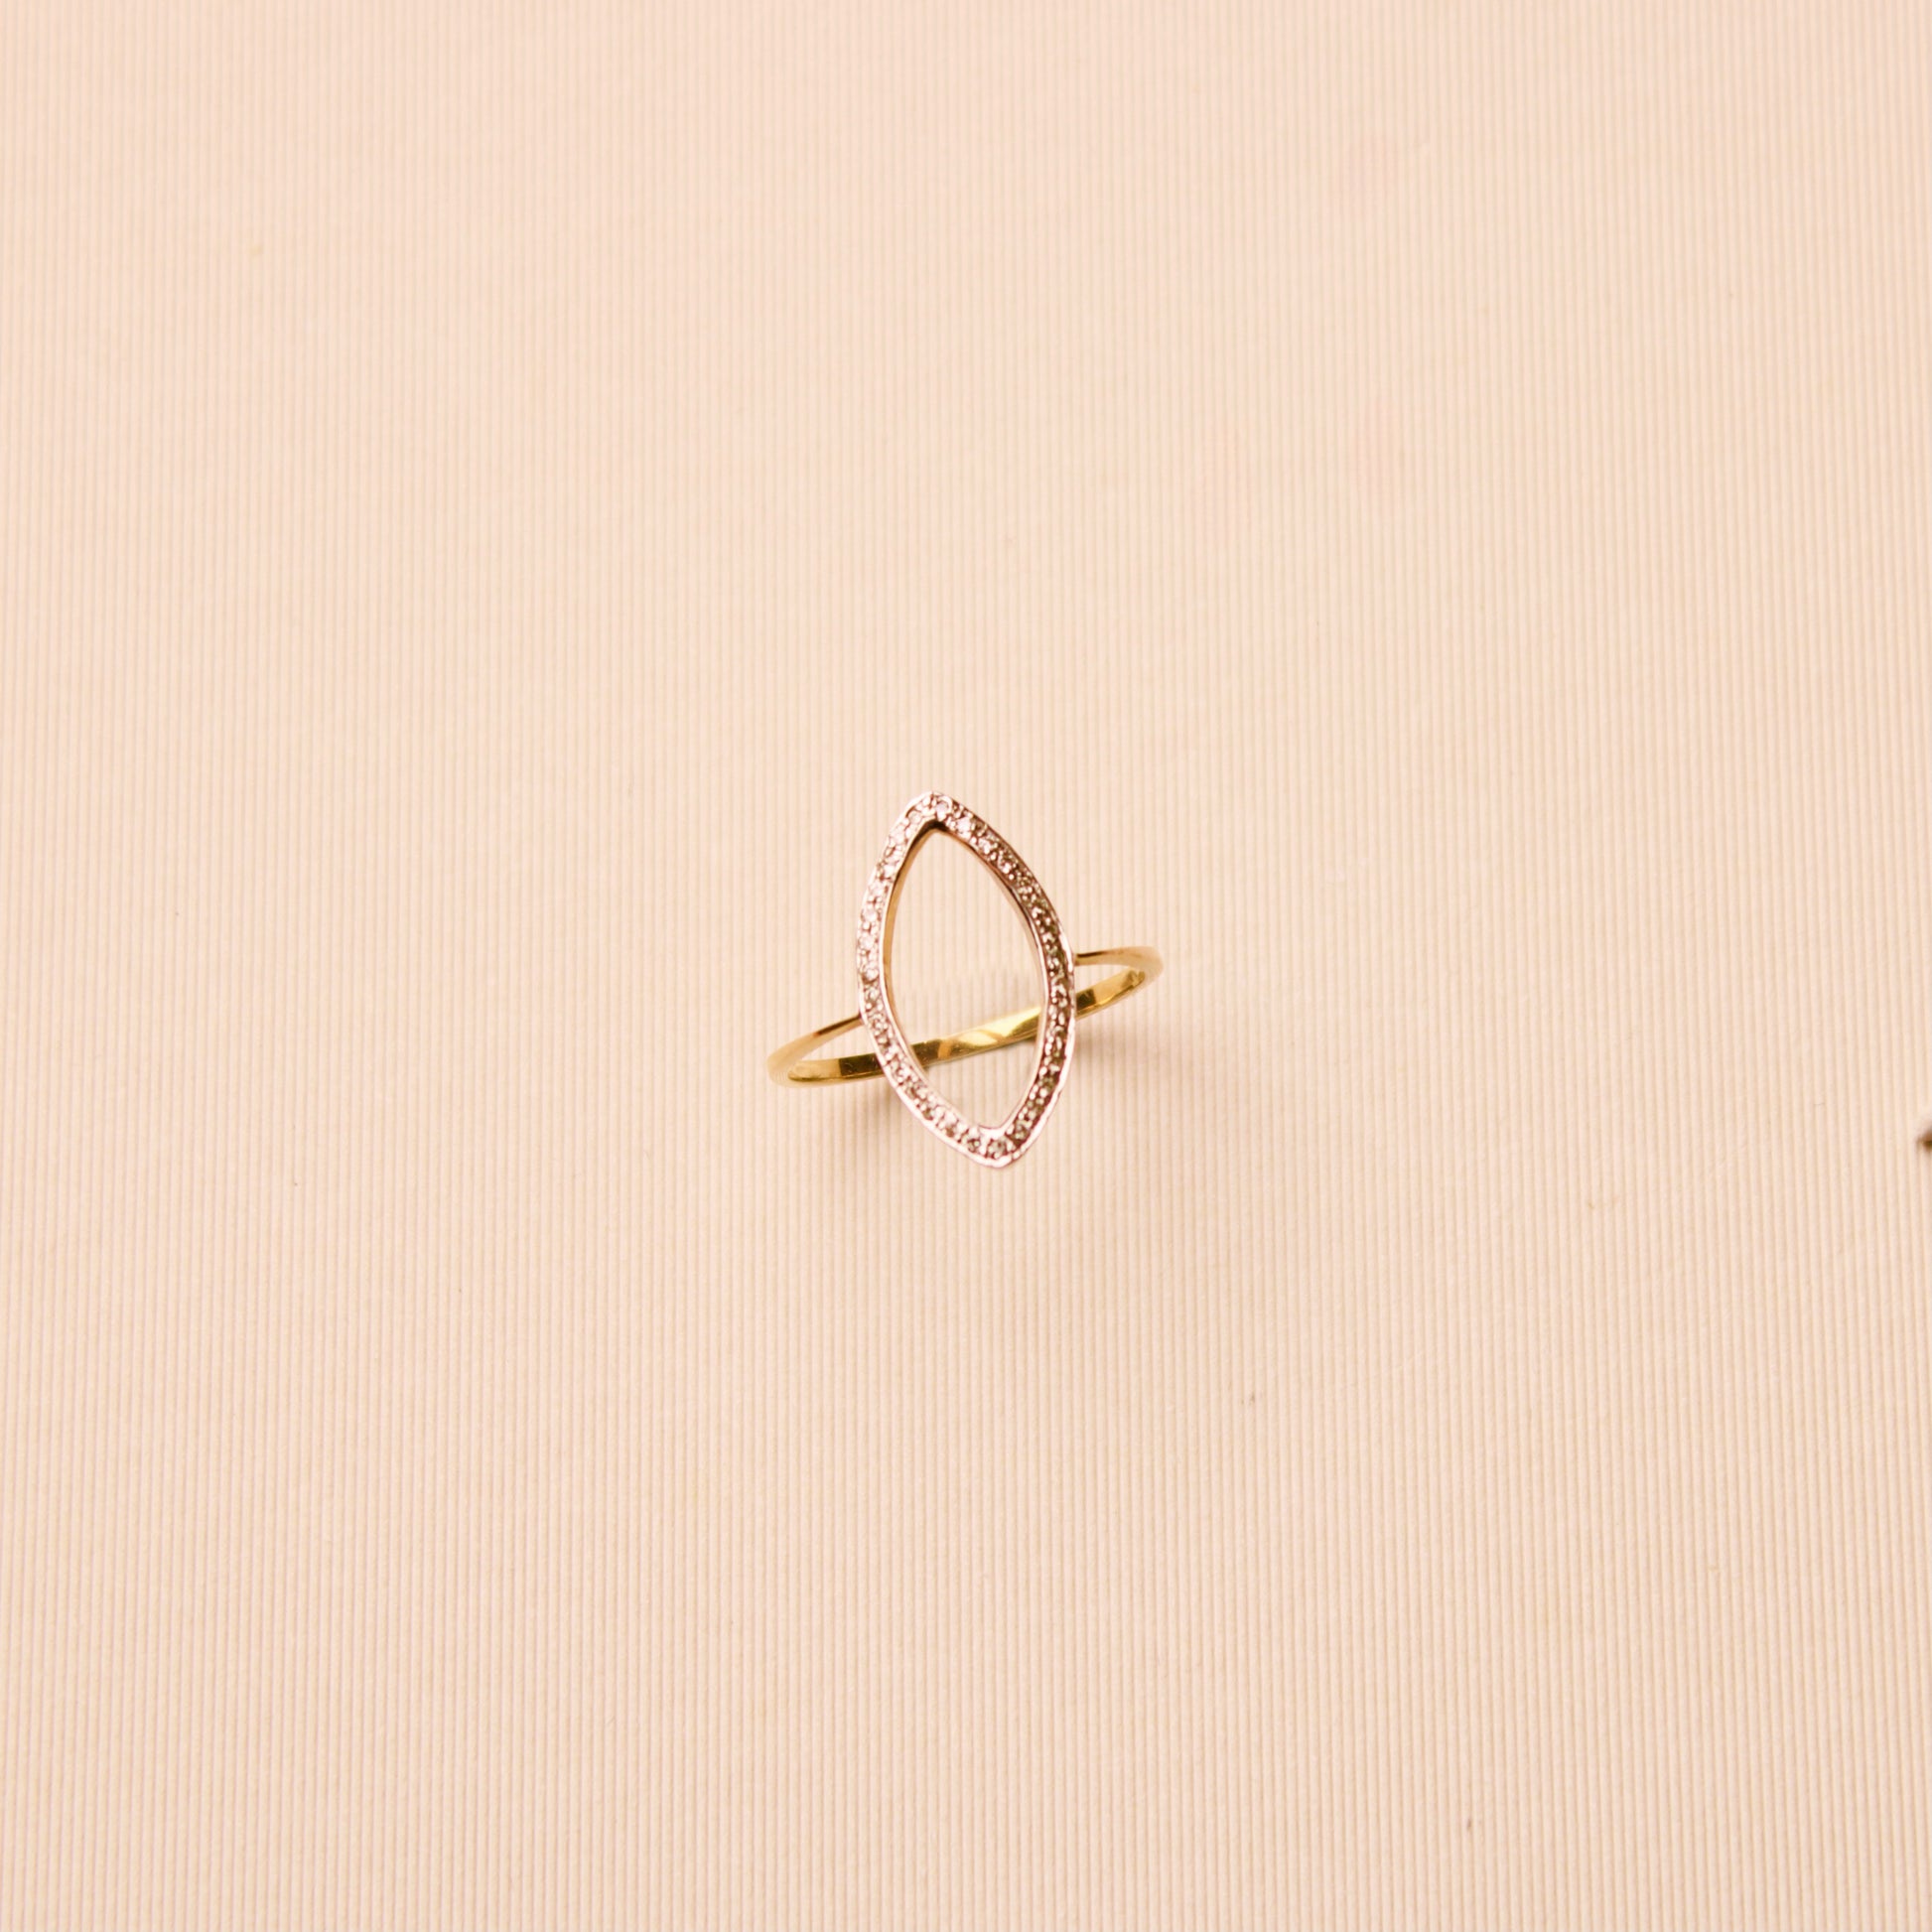 14k yellow gold geometric ring featuring small diamonds